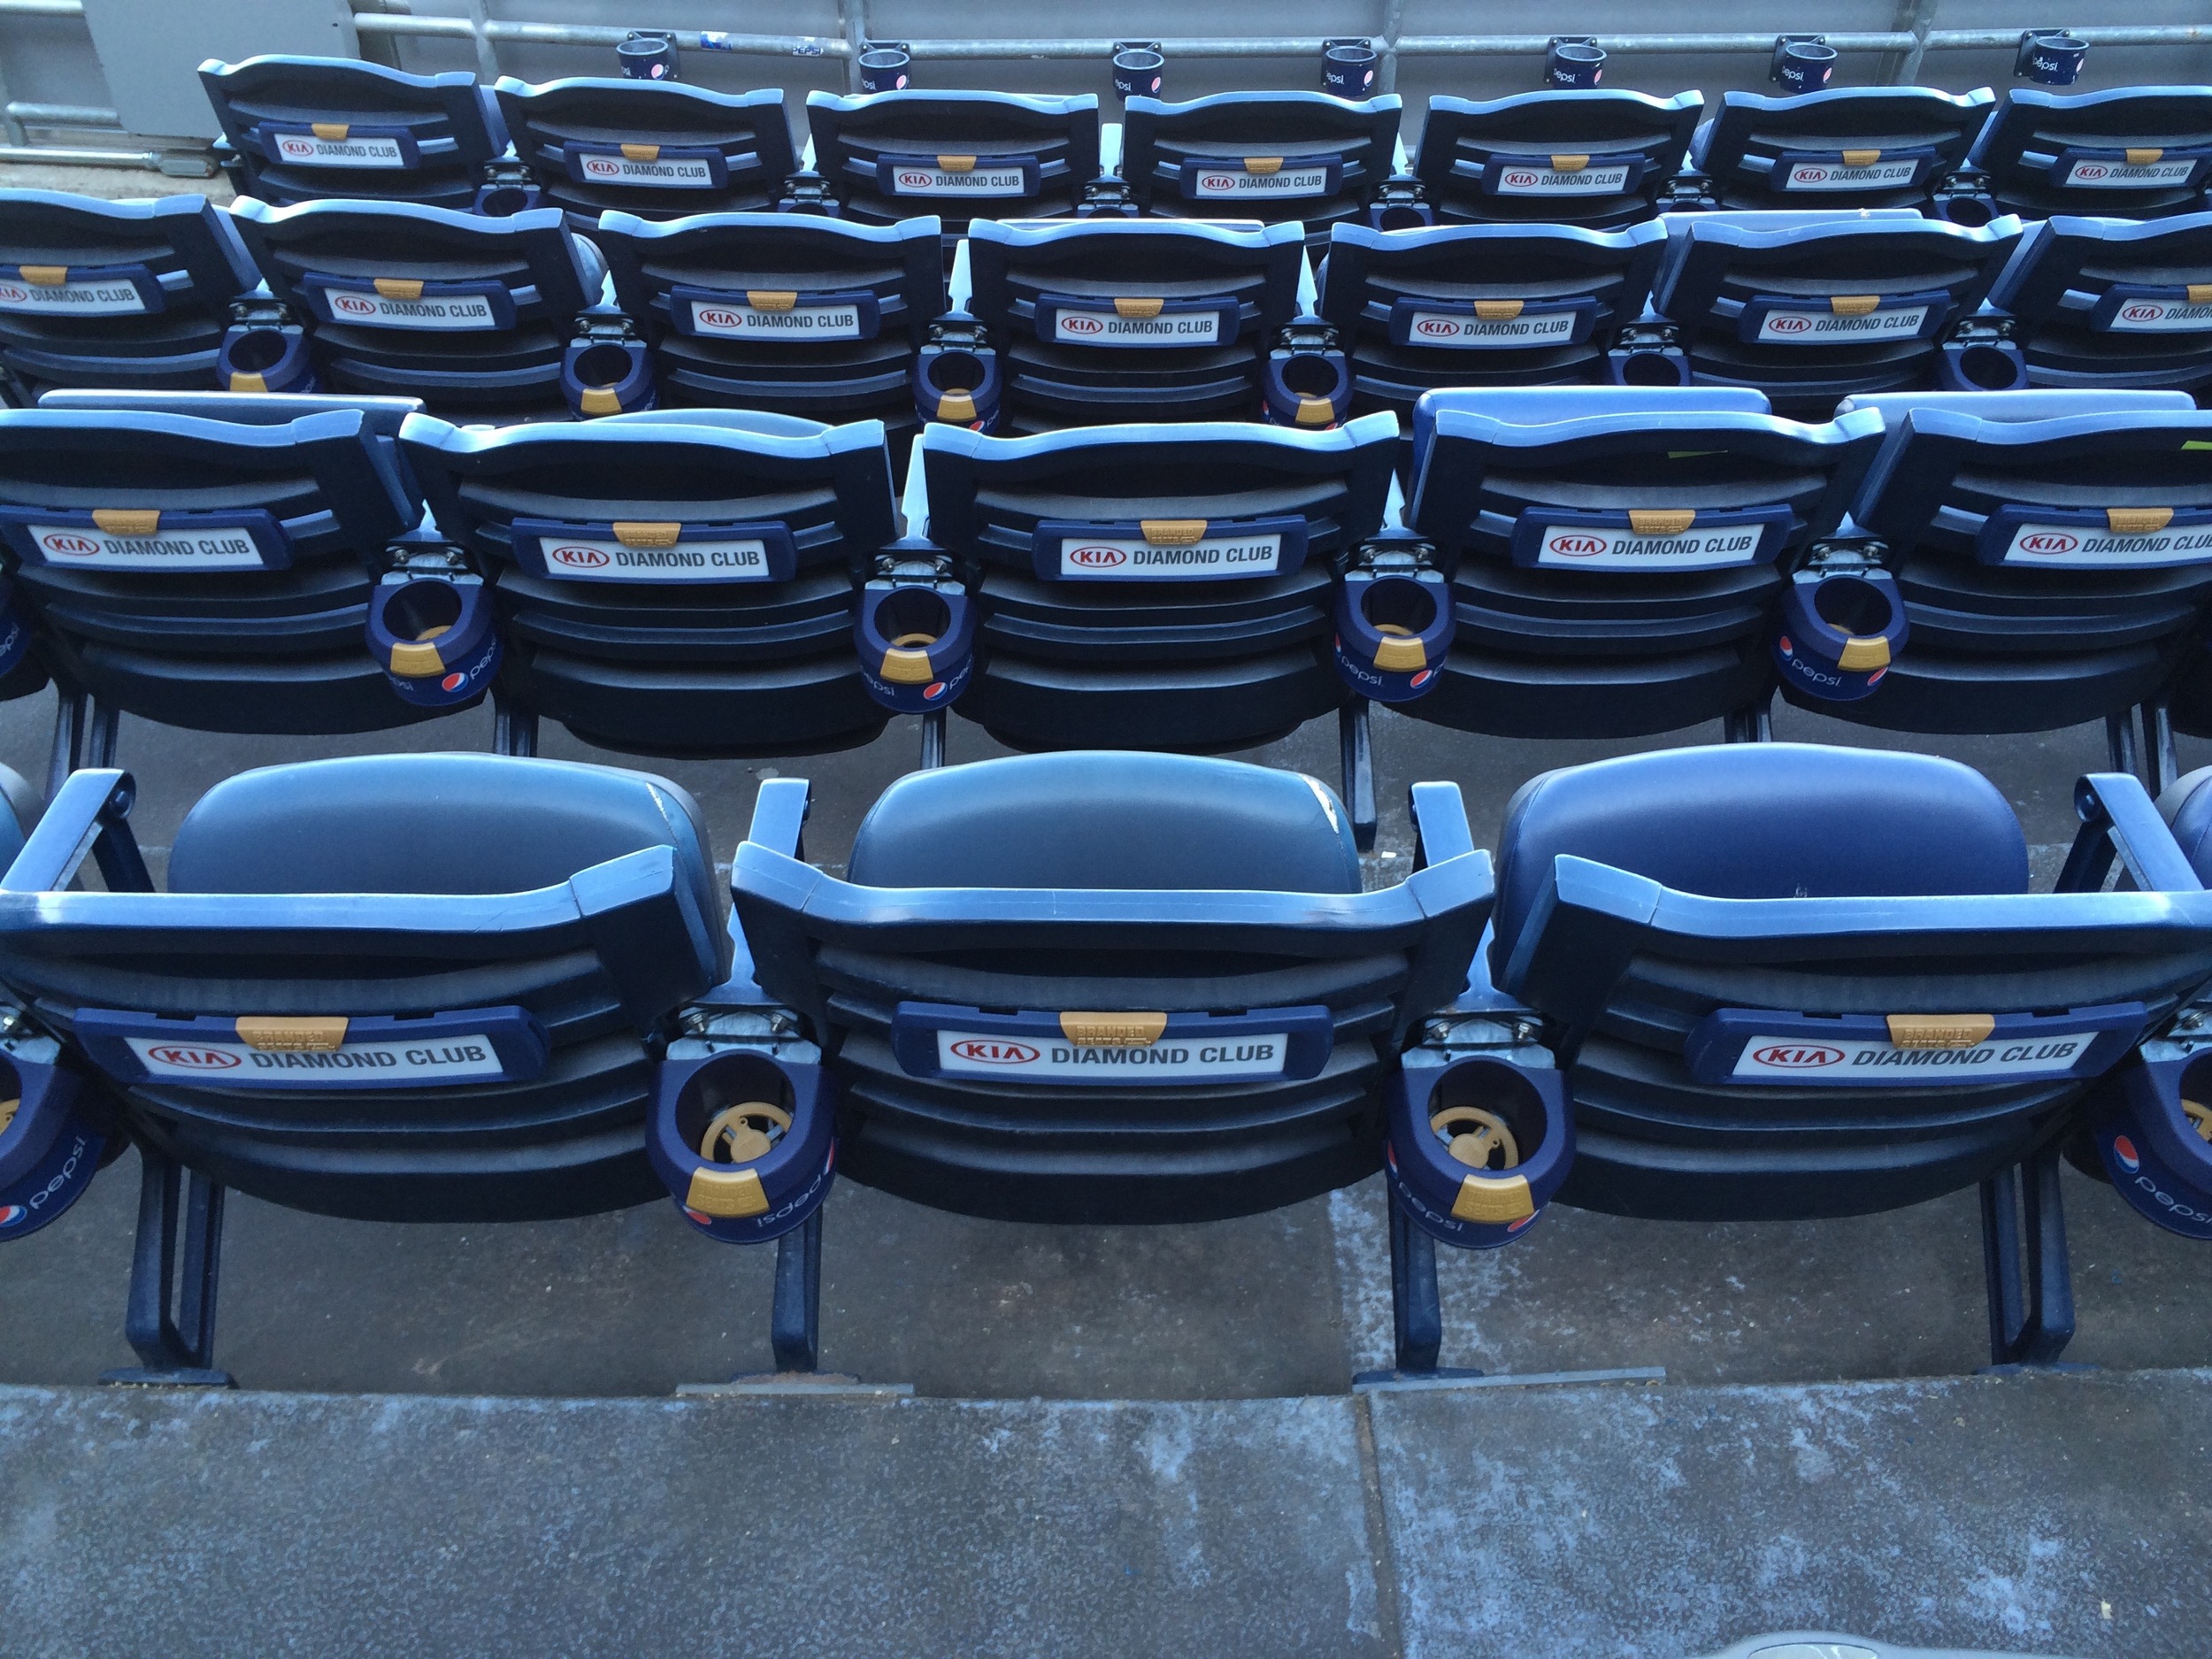 Stadium chairs-State Farm Arena - Camatic Seating